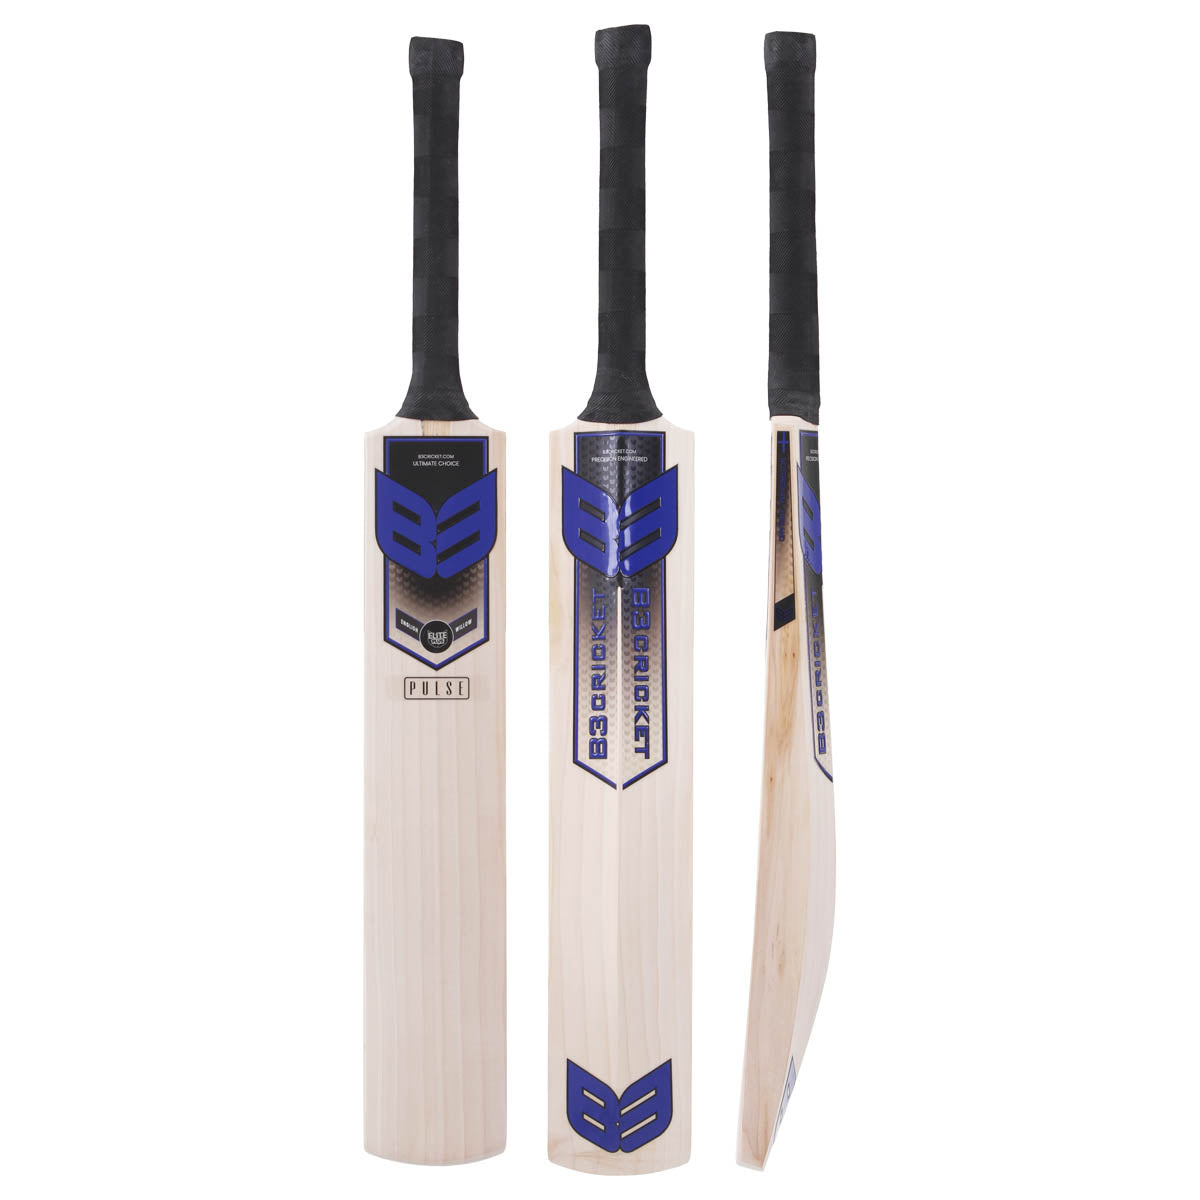 B3 Cricket Pulse Elite Plus (Grade 1) Cricket Bat - The Cricket Store